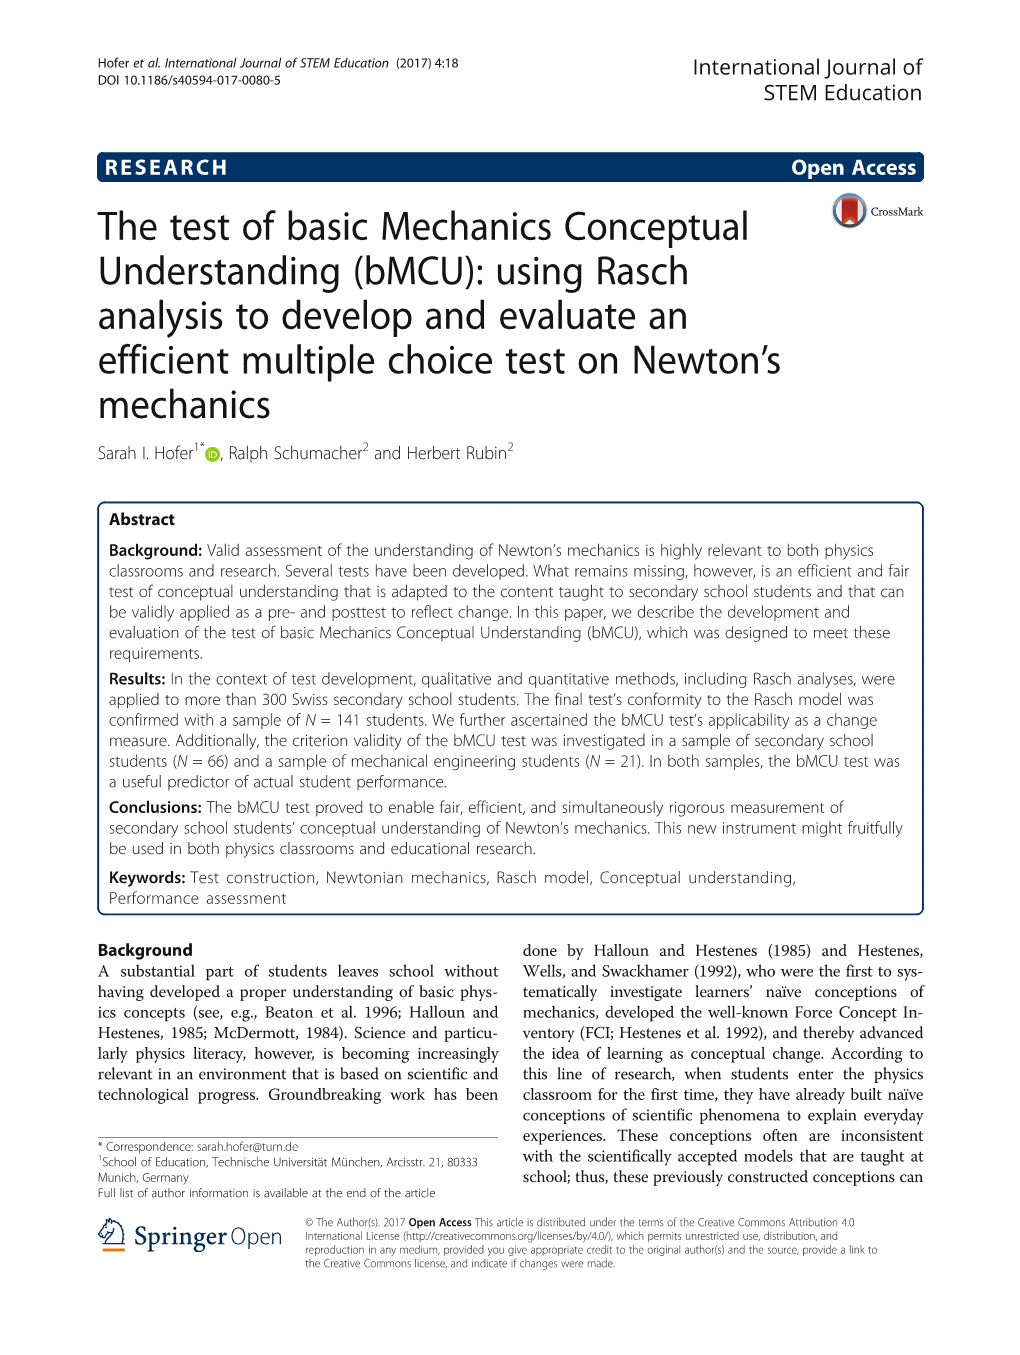 The Test of Basic Mechanics Conceptual Understanding (Bmcu)